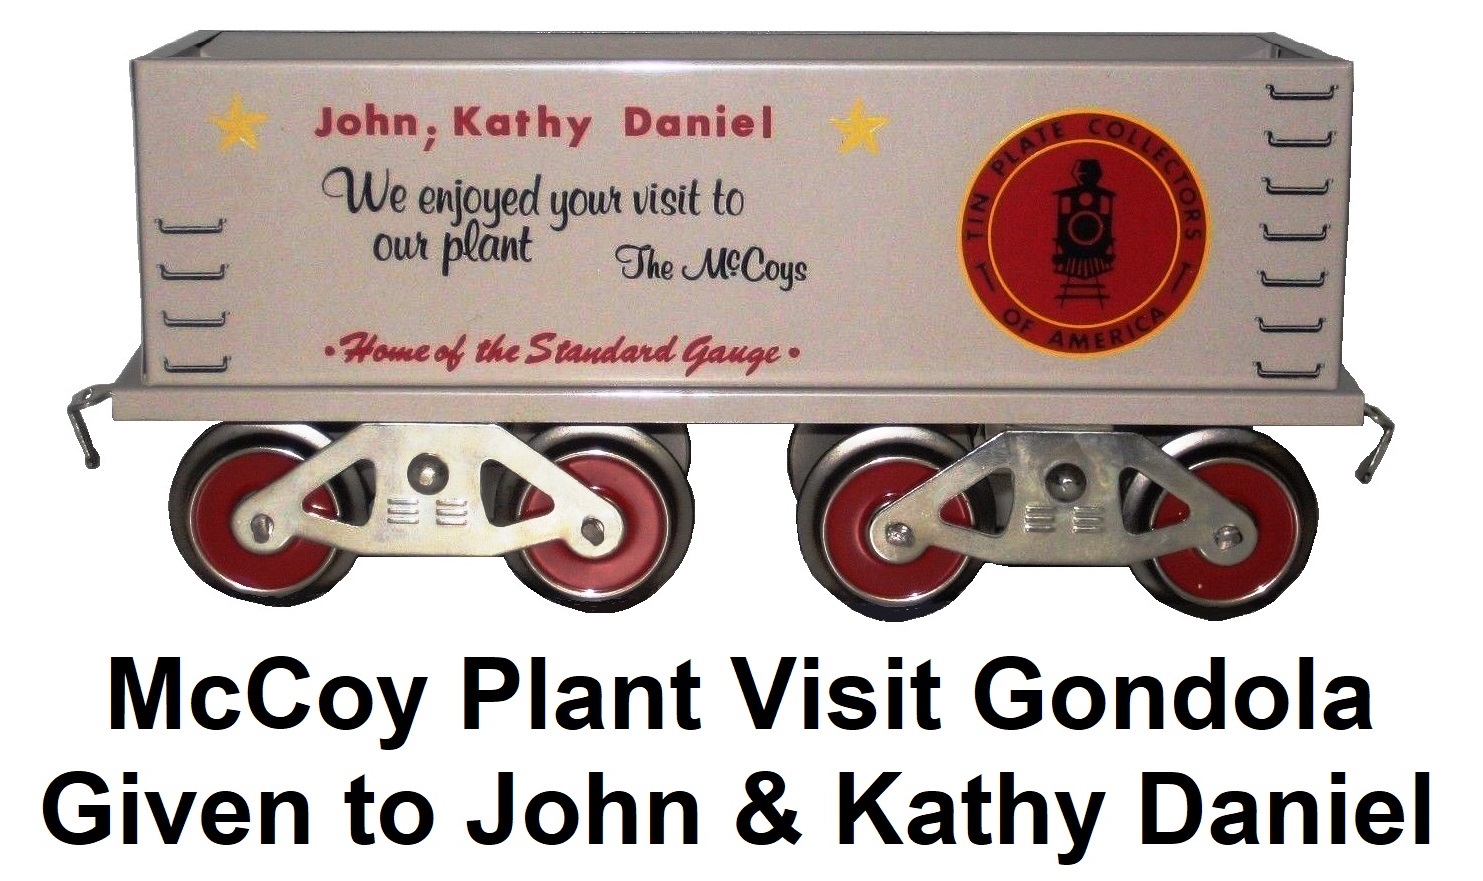 McCoy Standard gauge John & Kathy Daniel One-of-a-kind Tinplate Plant Visit gondola